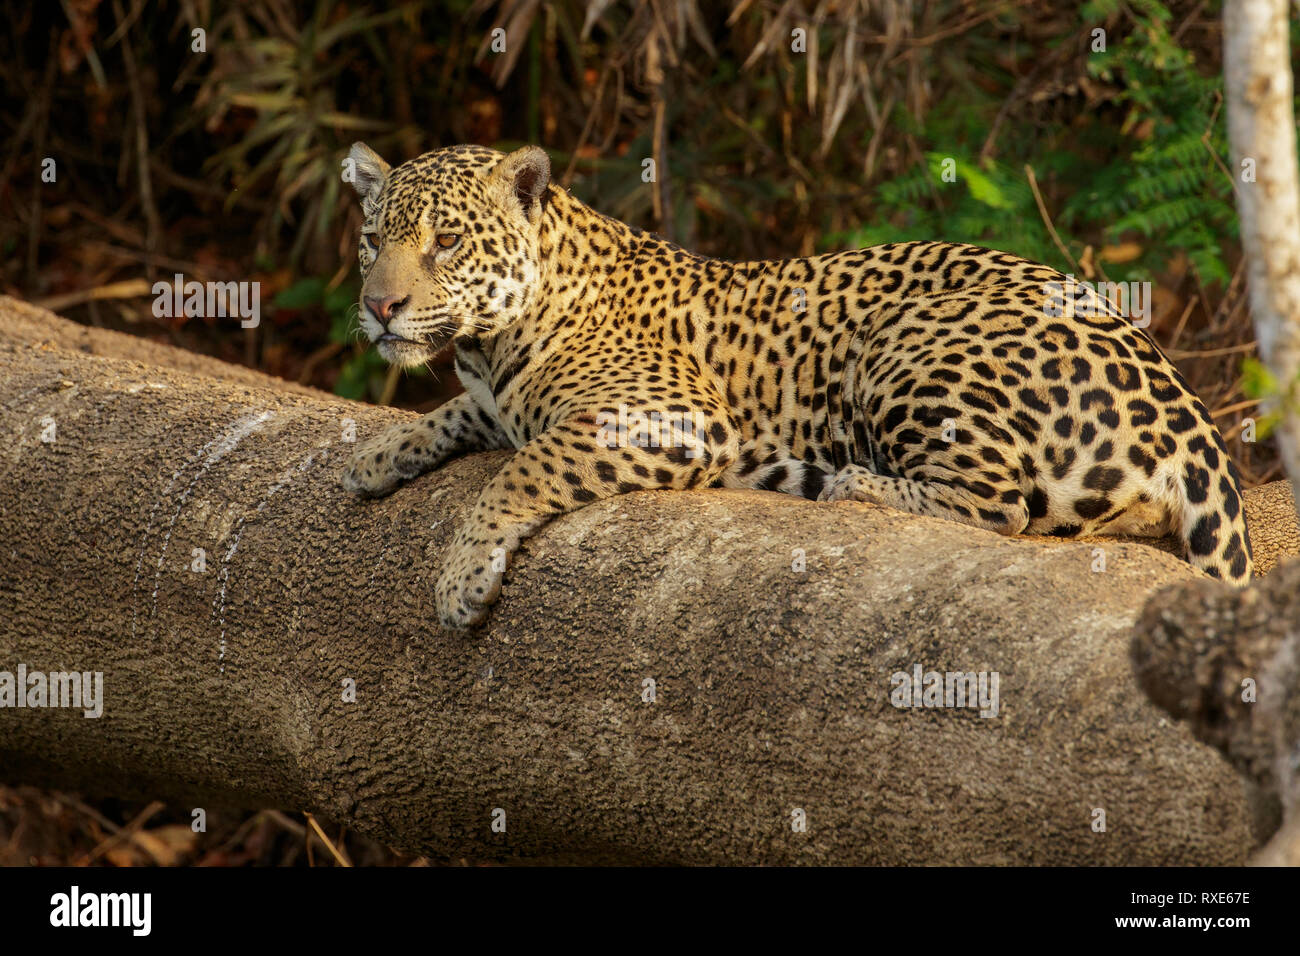 A Jaguar in the Pantalal region of Brazil. Stock Photo